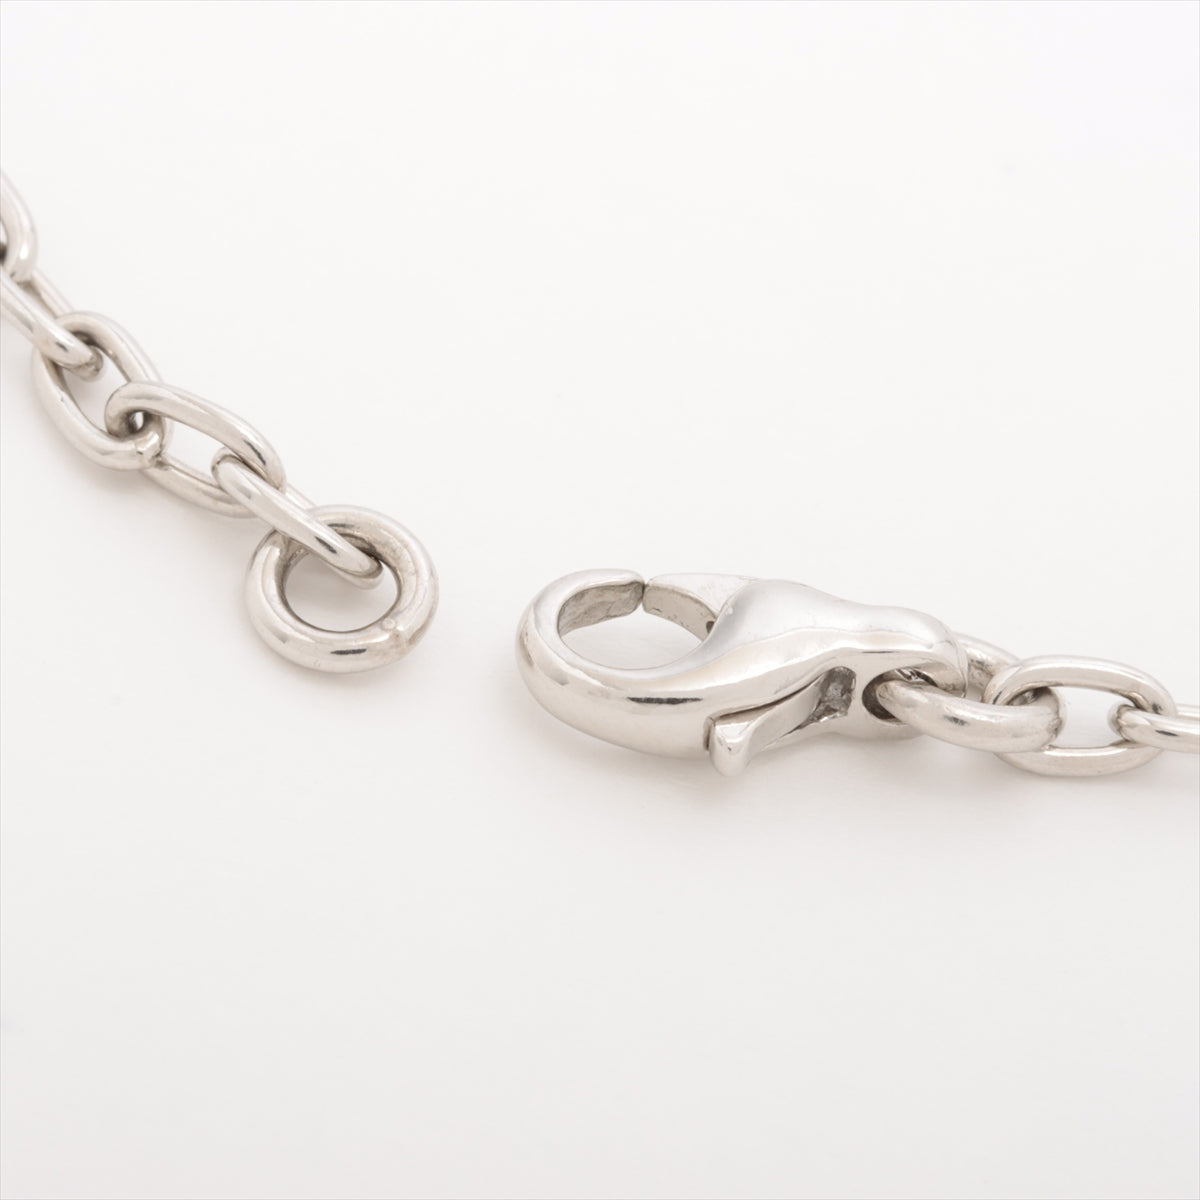 Tiffany Sentimental Heart diamond Bracelet Pt950 8.1g